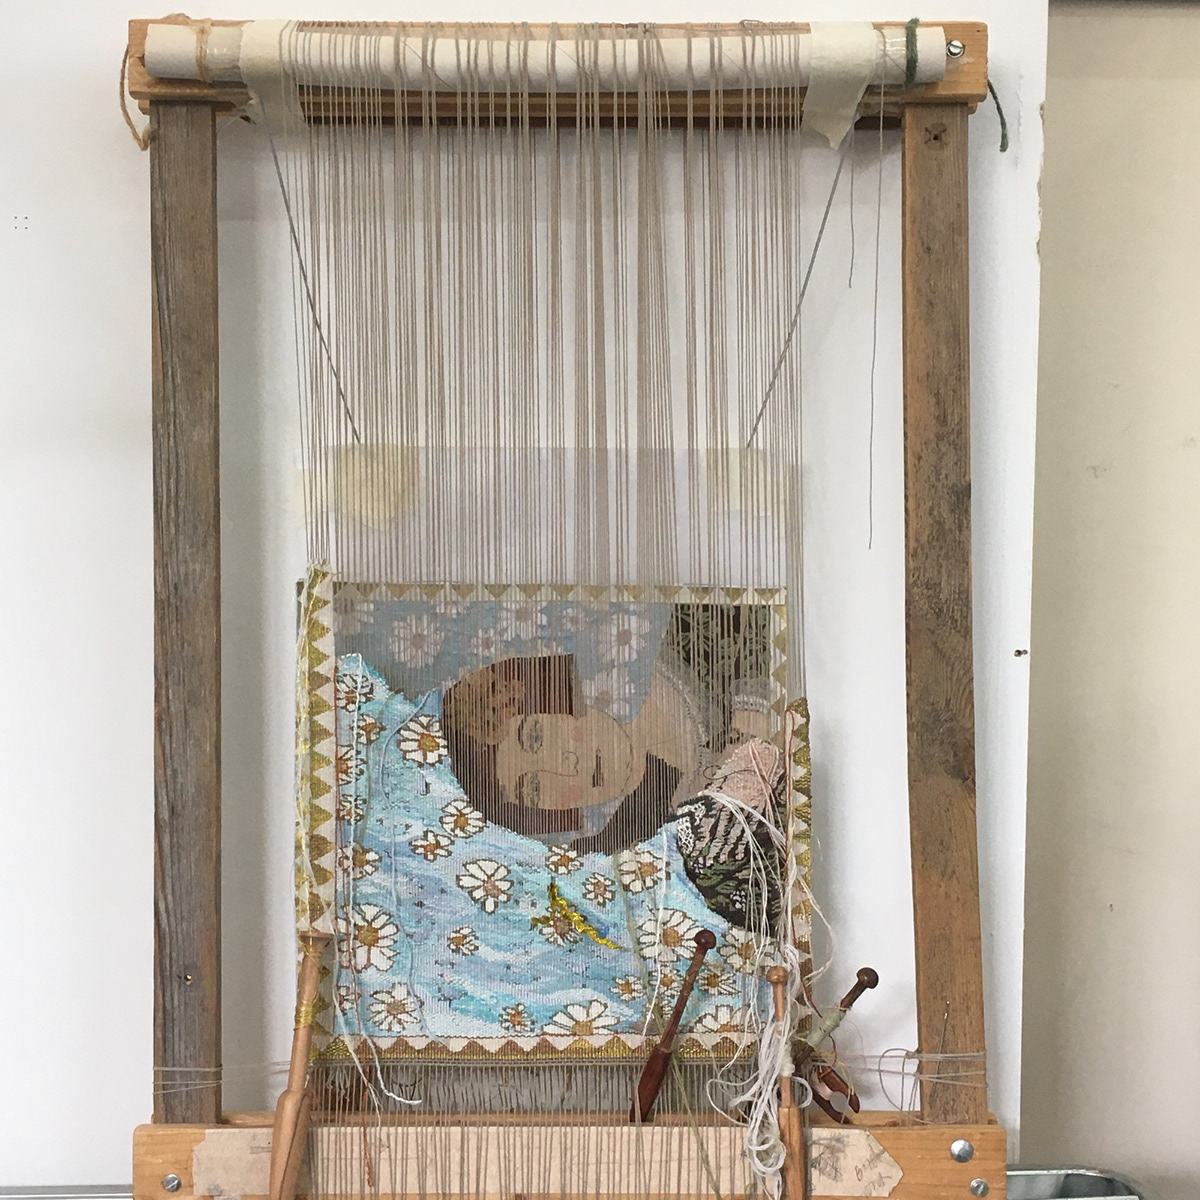 tapestry TAPESTRY WEAVING weaving Woven fiber art fibre artist Fiber Artist weaver Irish Art fibre art